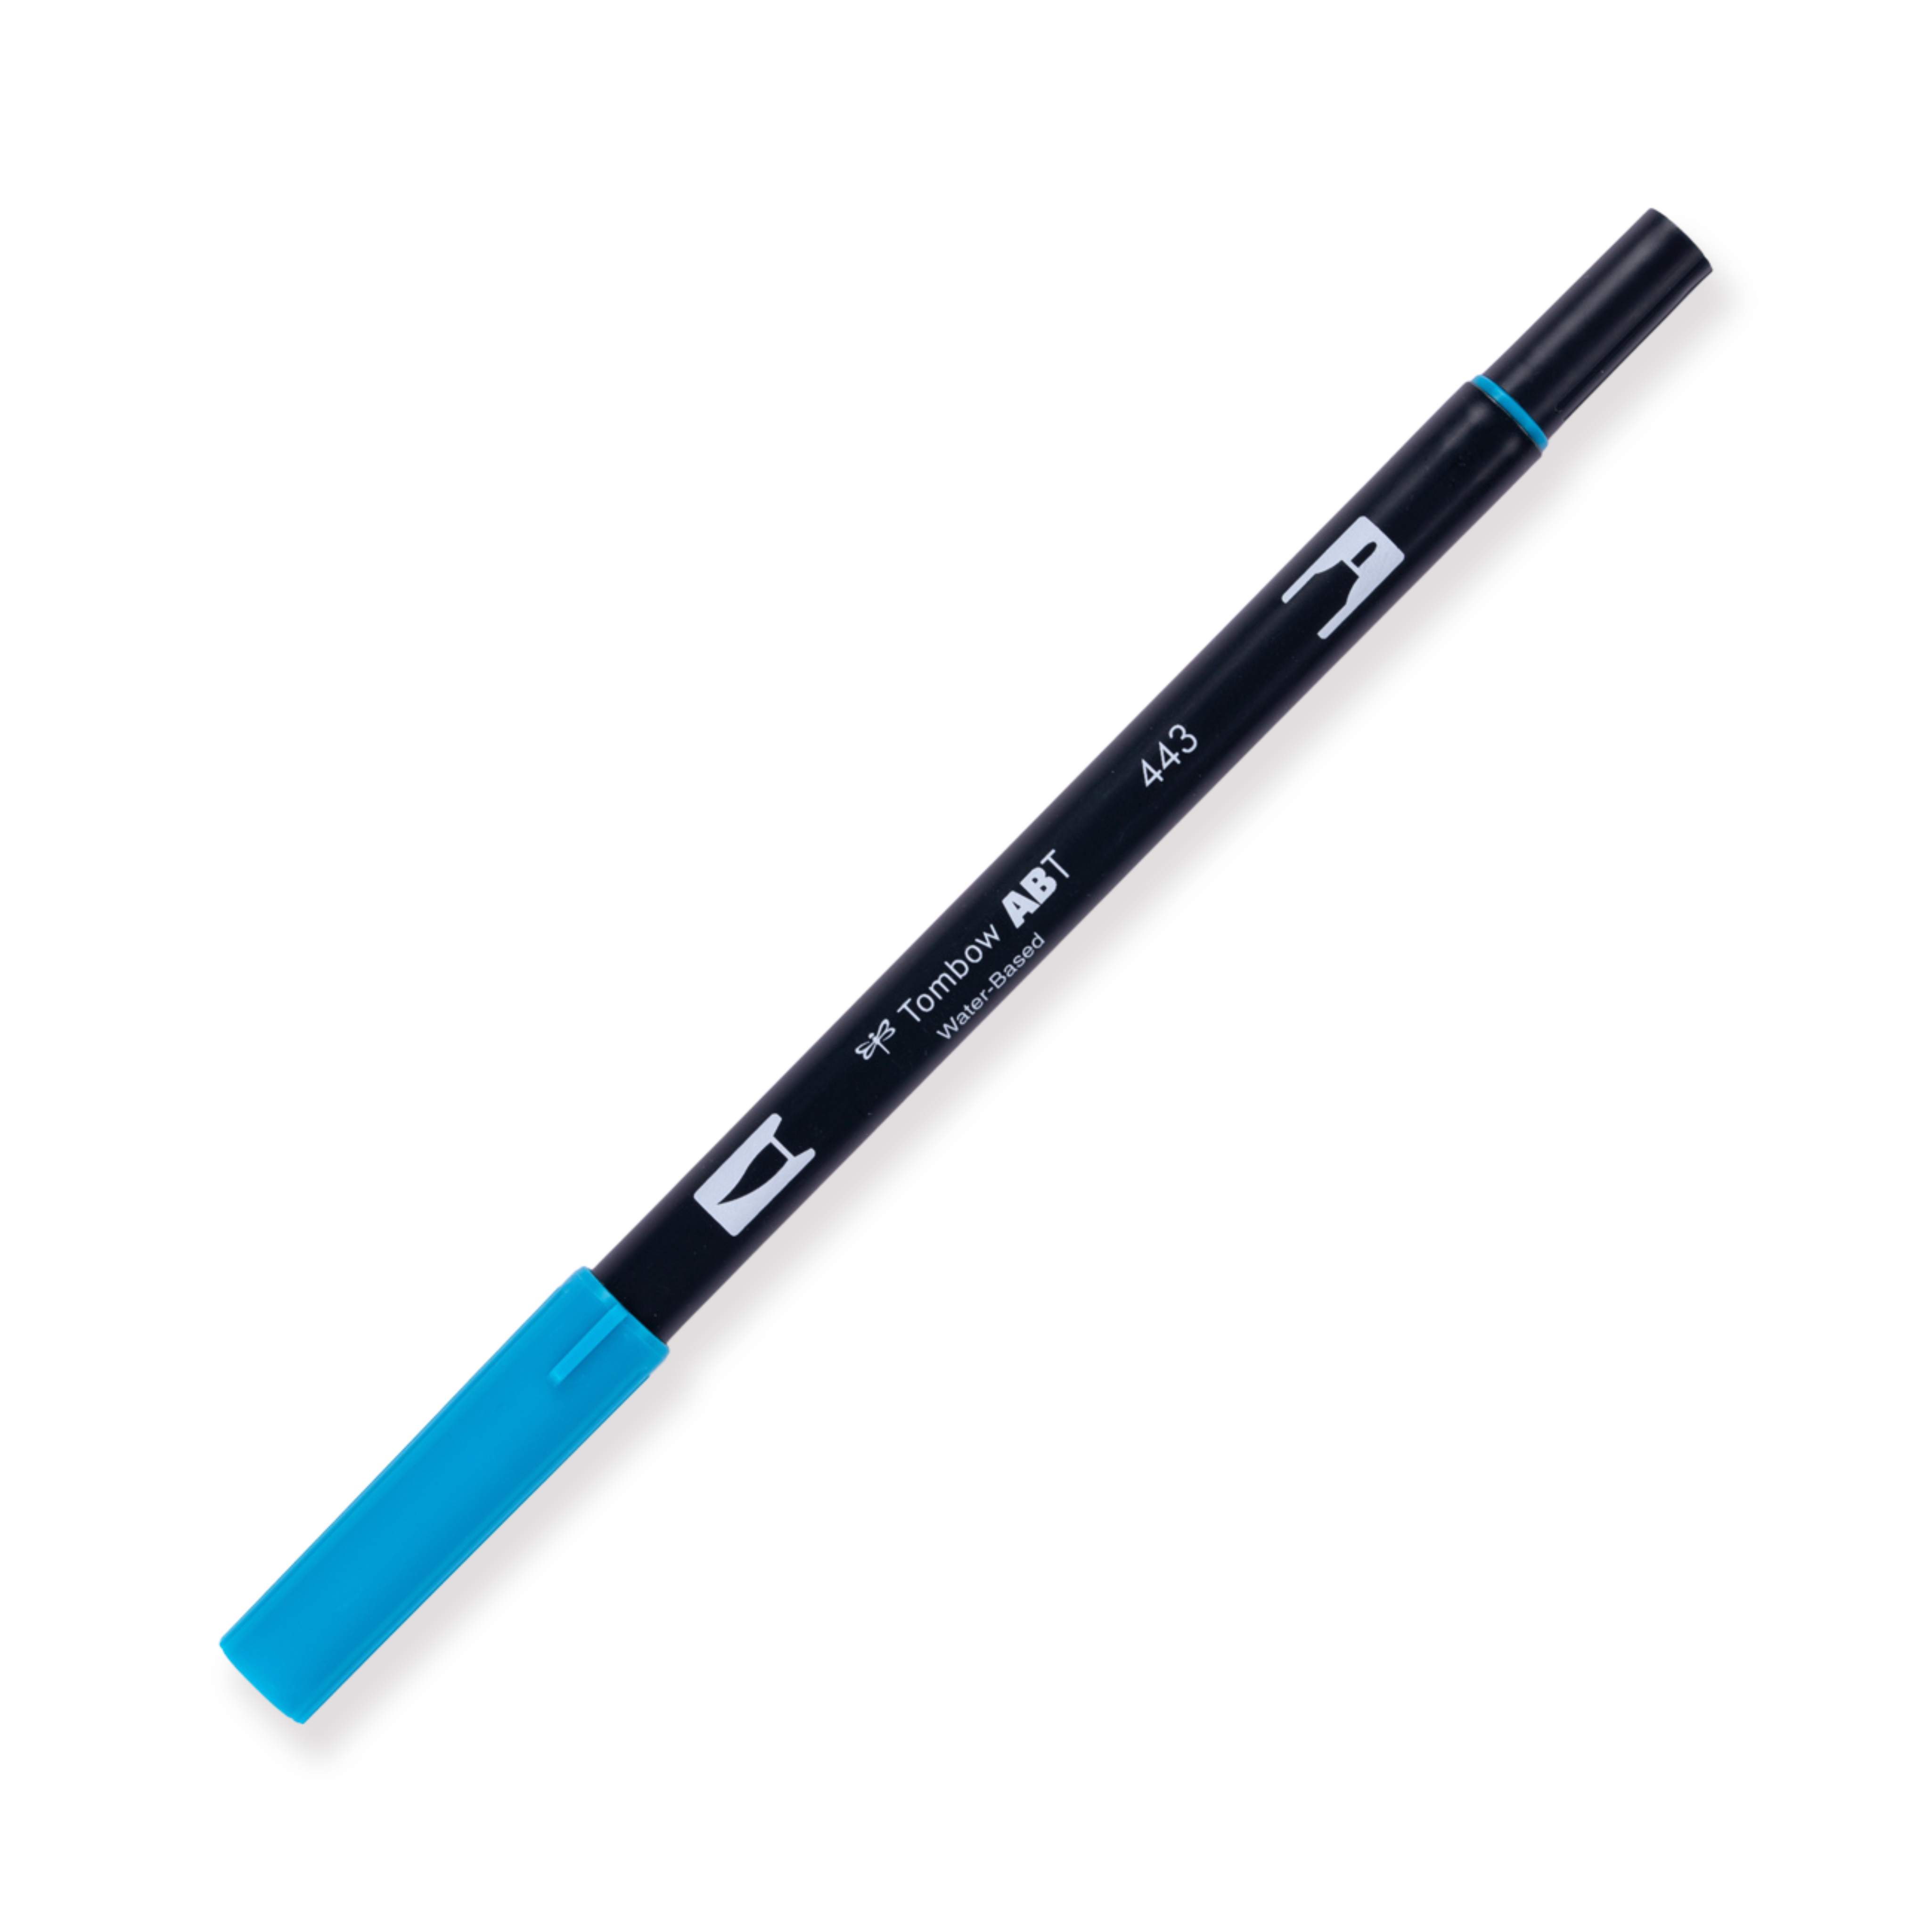 Tombow Dual Brush Pen - 443 - Turquoise